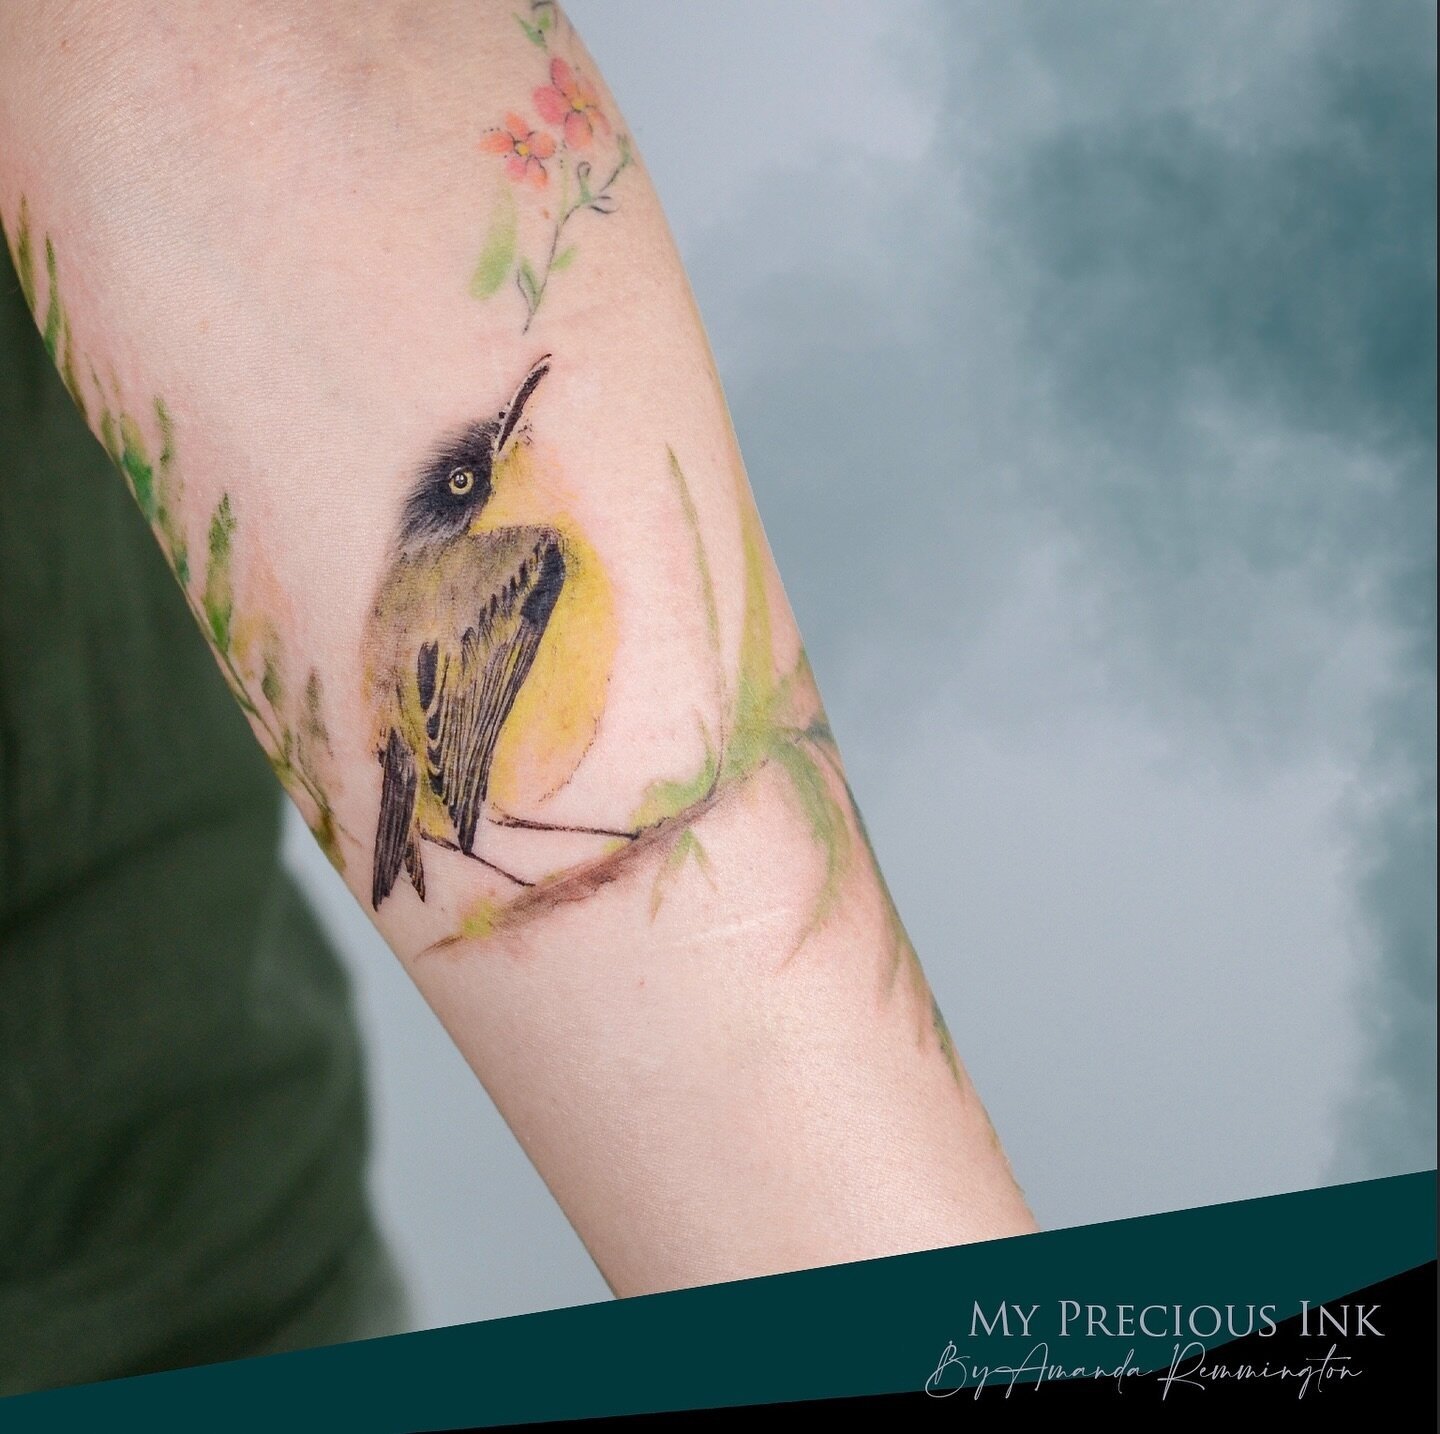 This little bird has been added to the little frog. Still work in progress!

///&mdash;&mdash;&gt; www.mypreciousink.nl &lt;&mdash;&mdash;\\\

#Tattoo #watercolortattoo #watercolourtattoo #watercolor #thebesttattooartists #tattoodo 
  #tattooart #tat